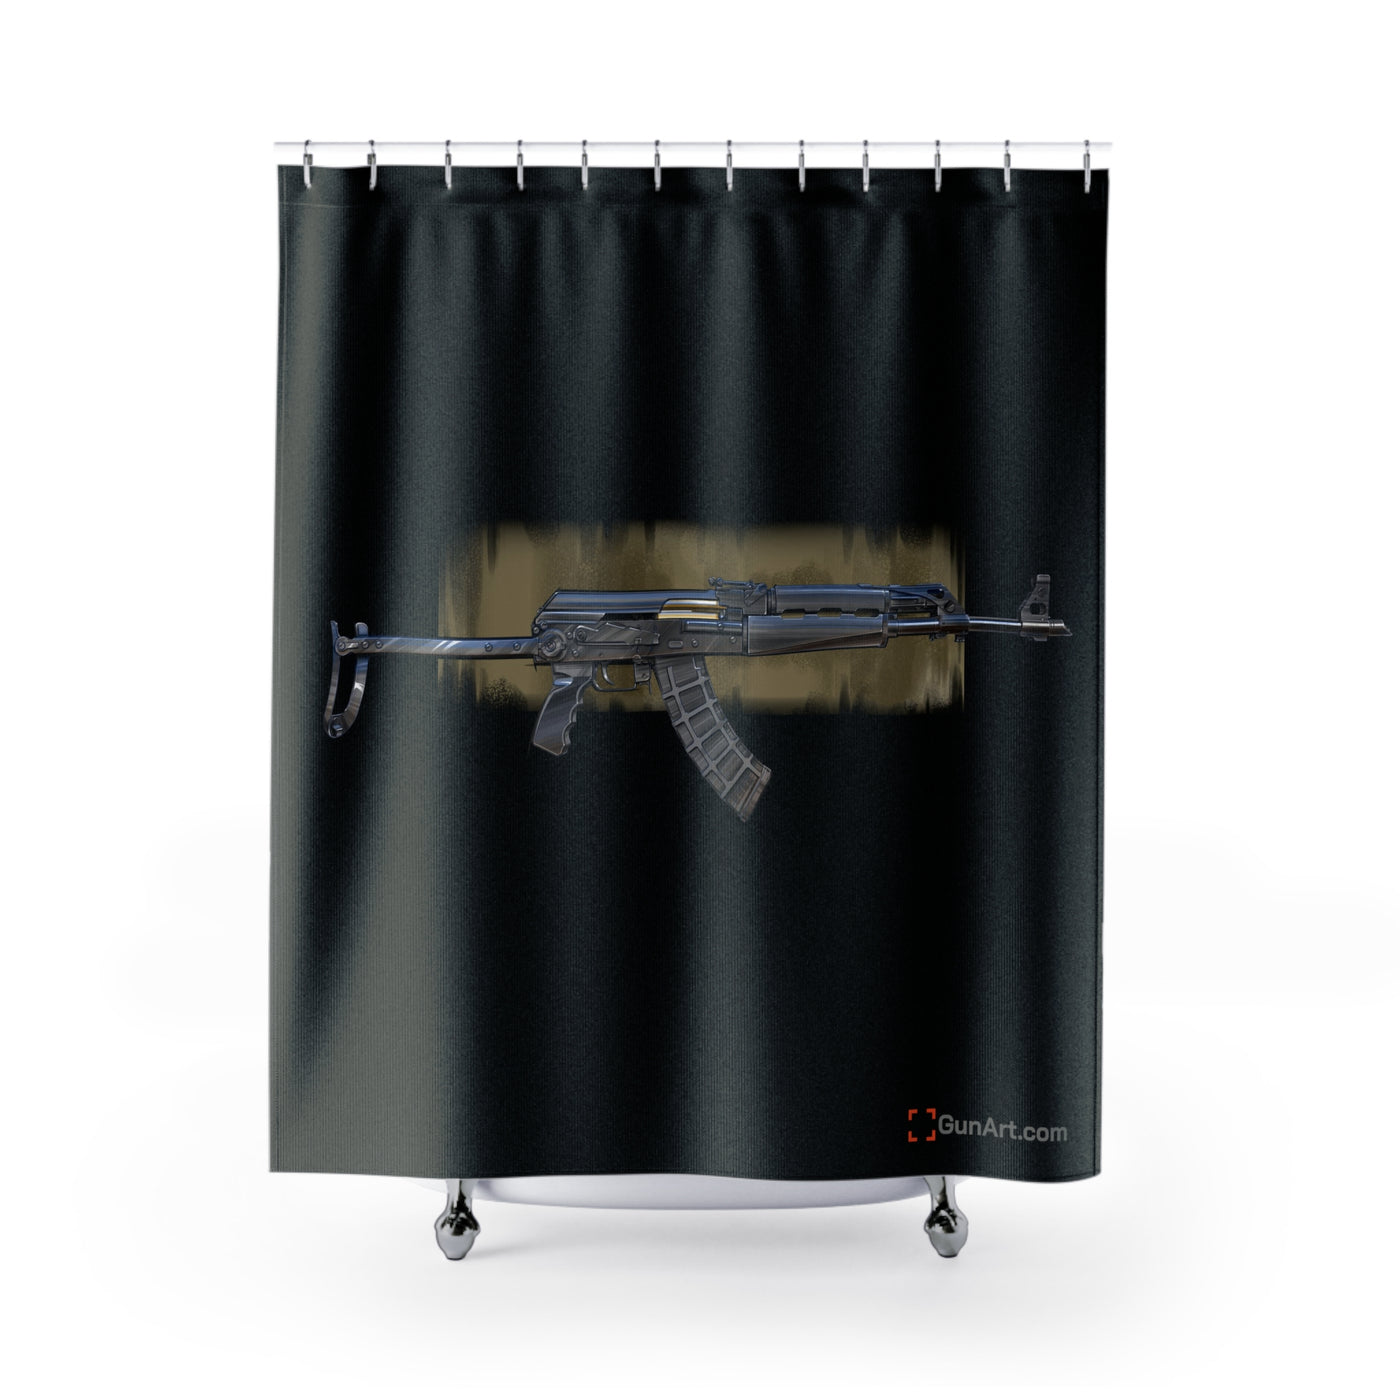 The Paratrooper / AK-47 Underfolder Shower Curtains - Black Background